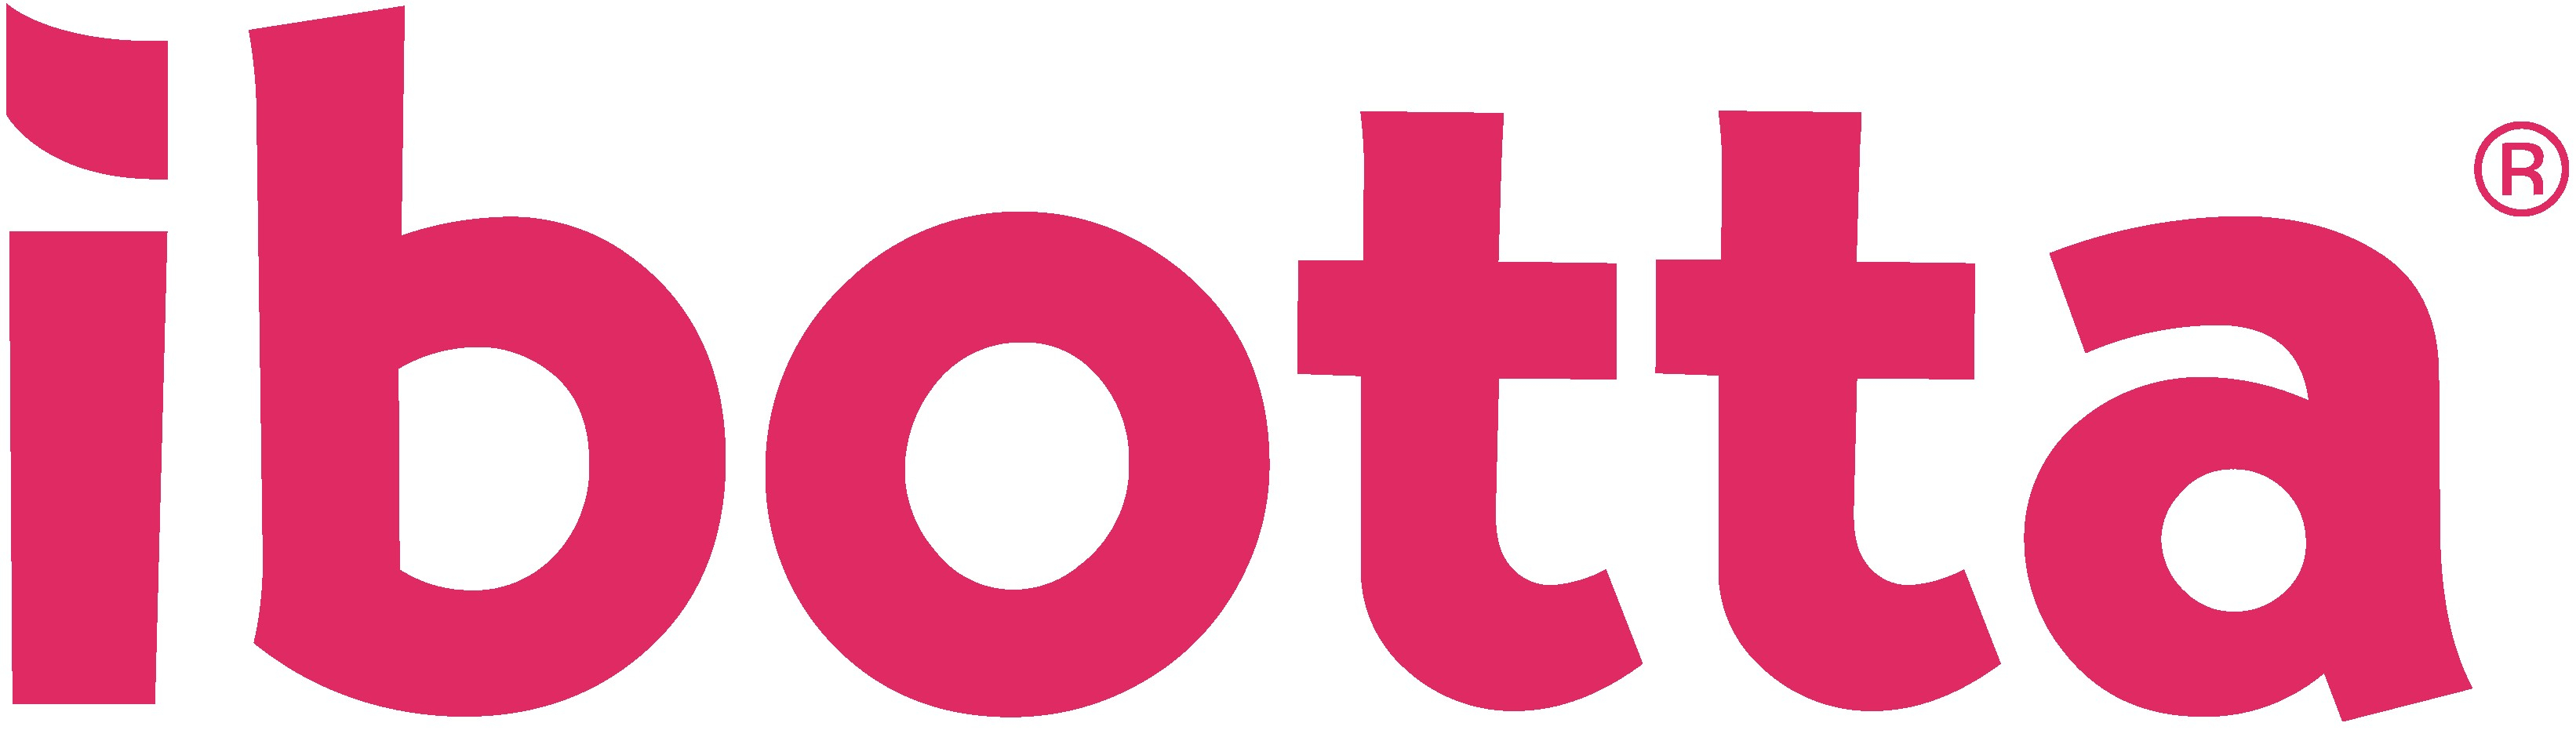 Ibotta, Inc.